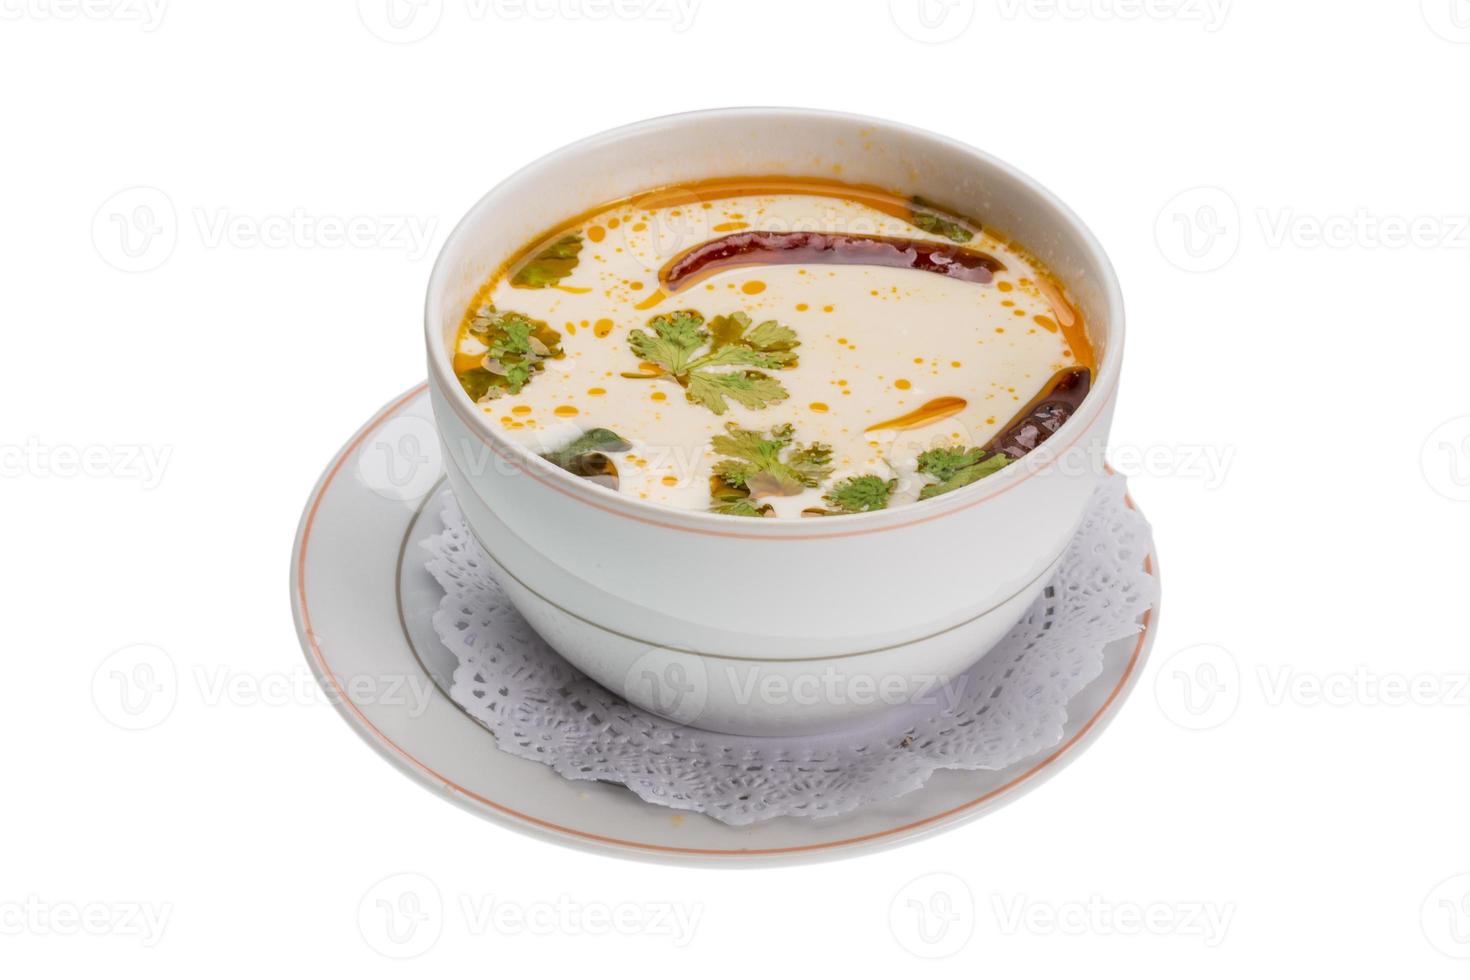 thailändska berömda soppa thom yam foto